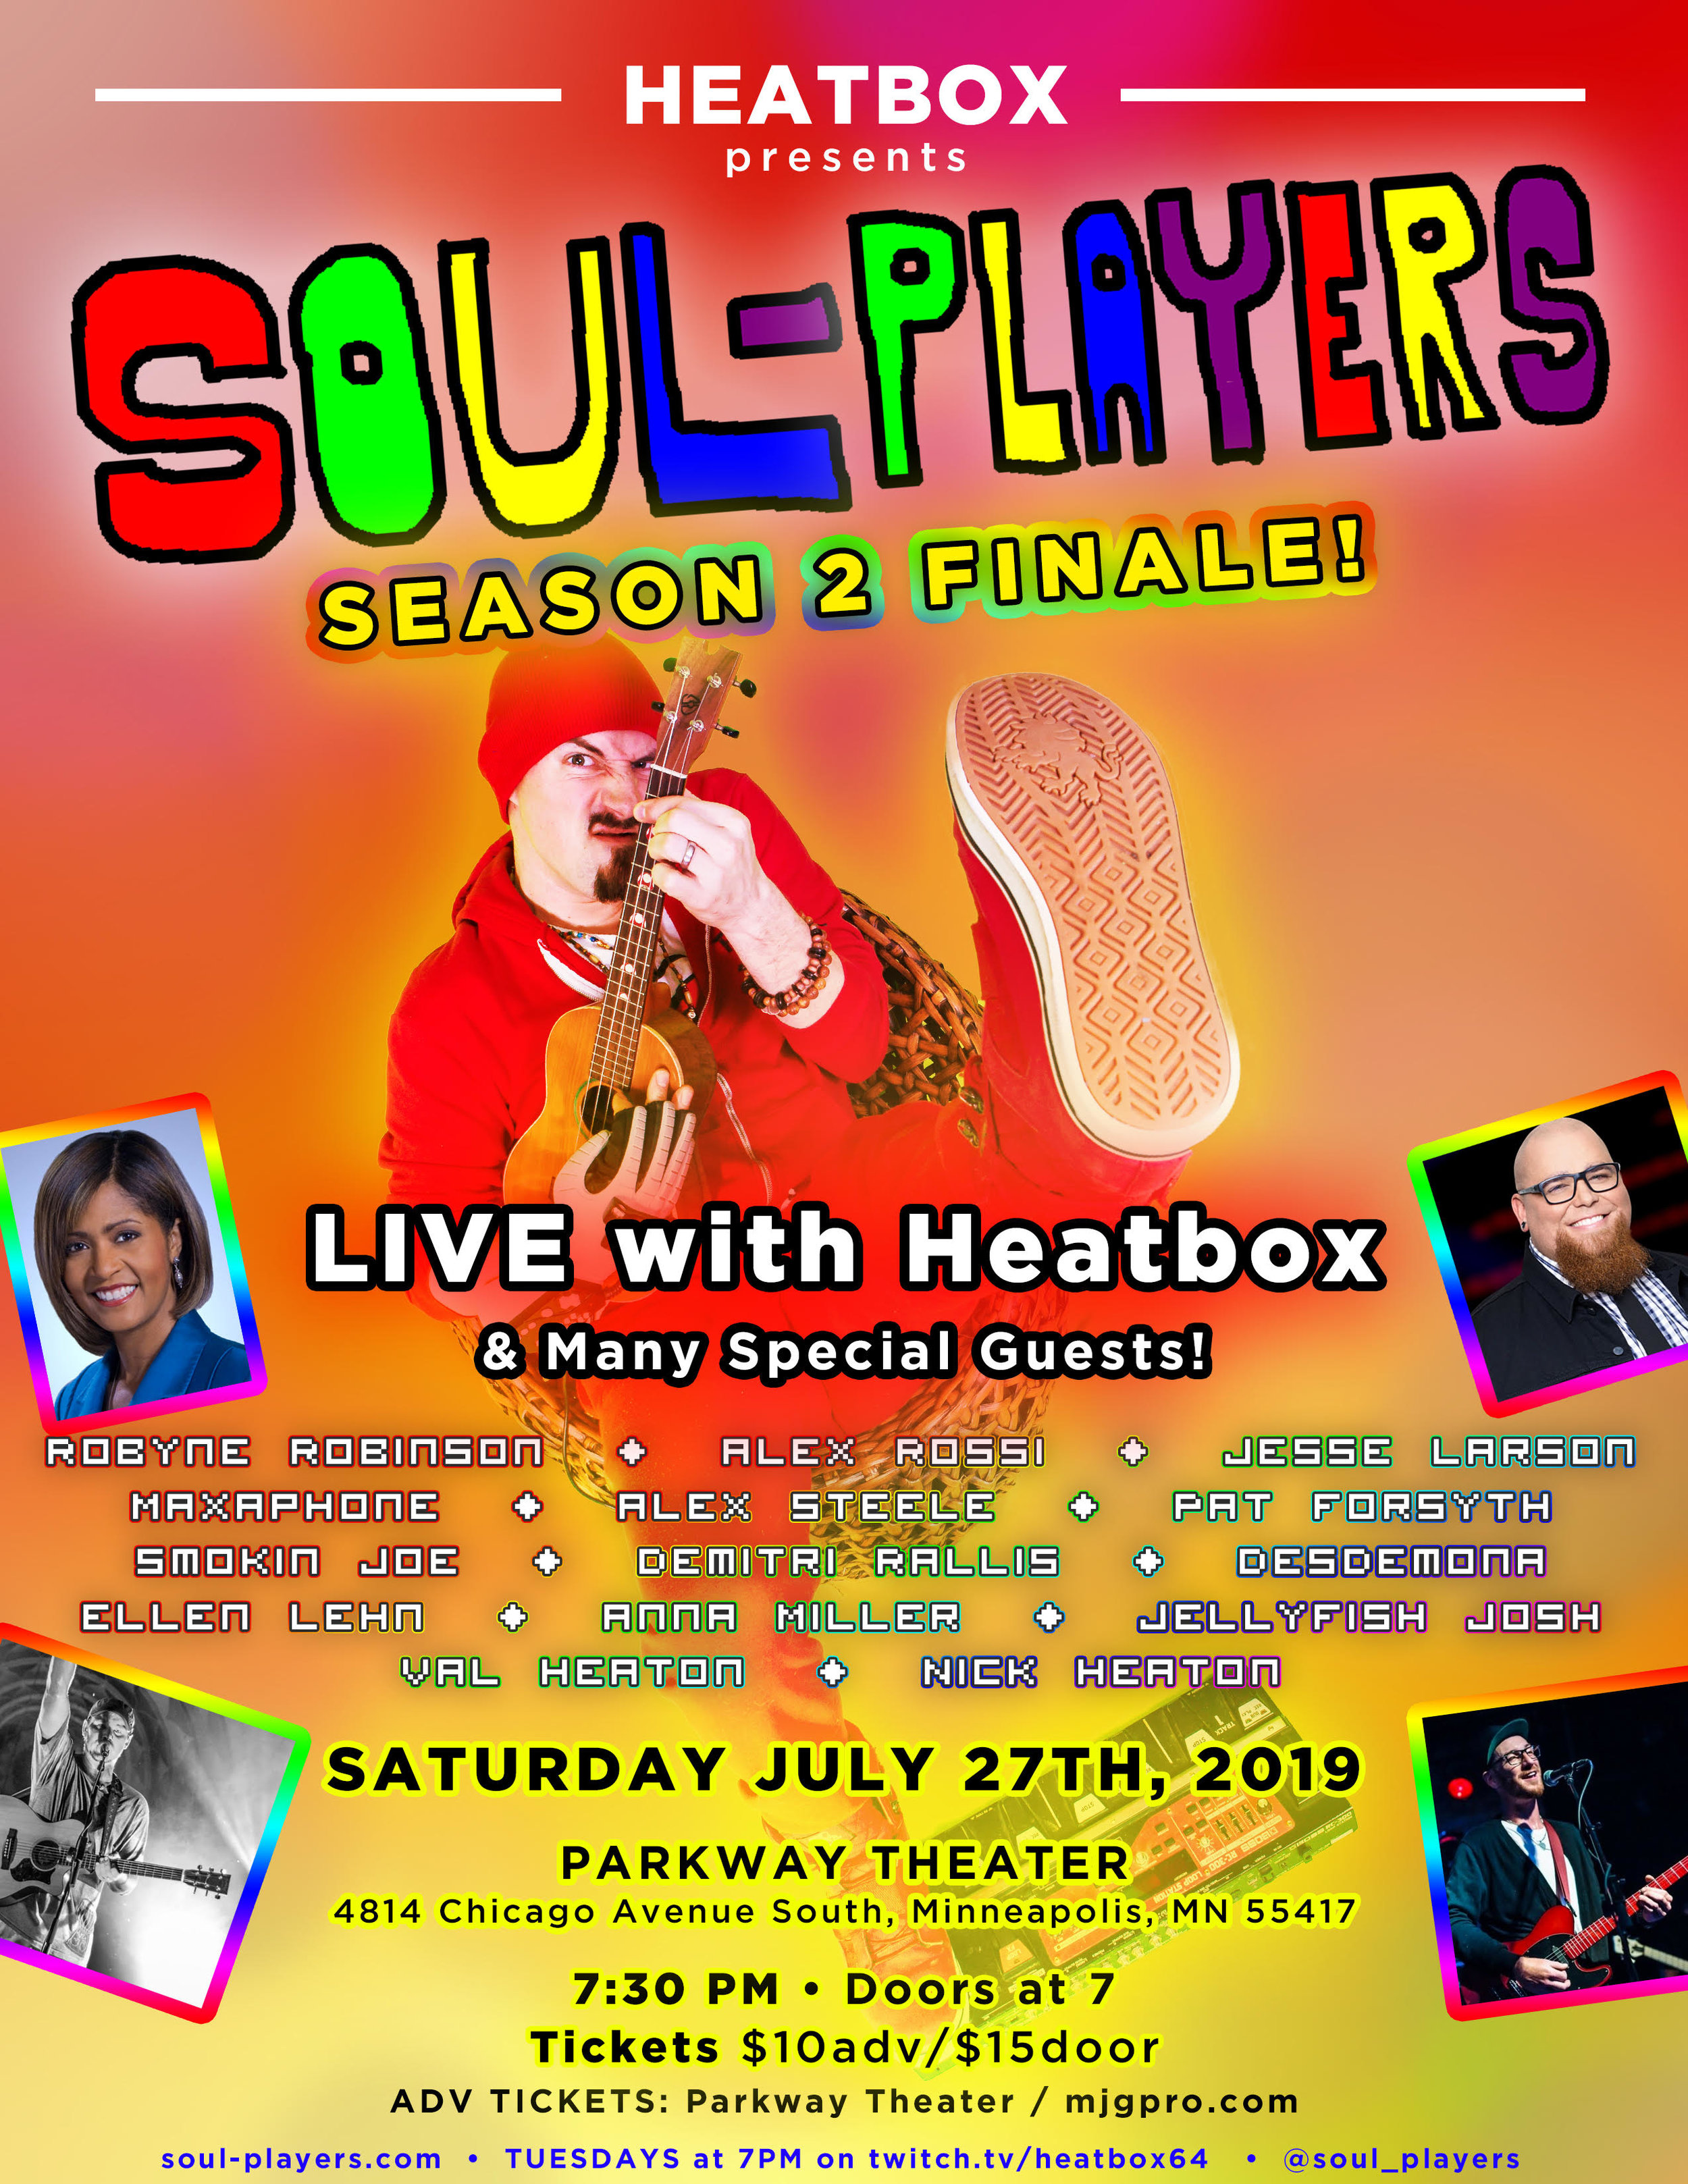 Heatbox Presents: Soul-Players Season 2 Finale